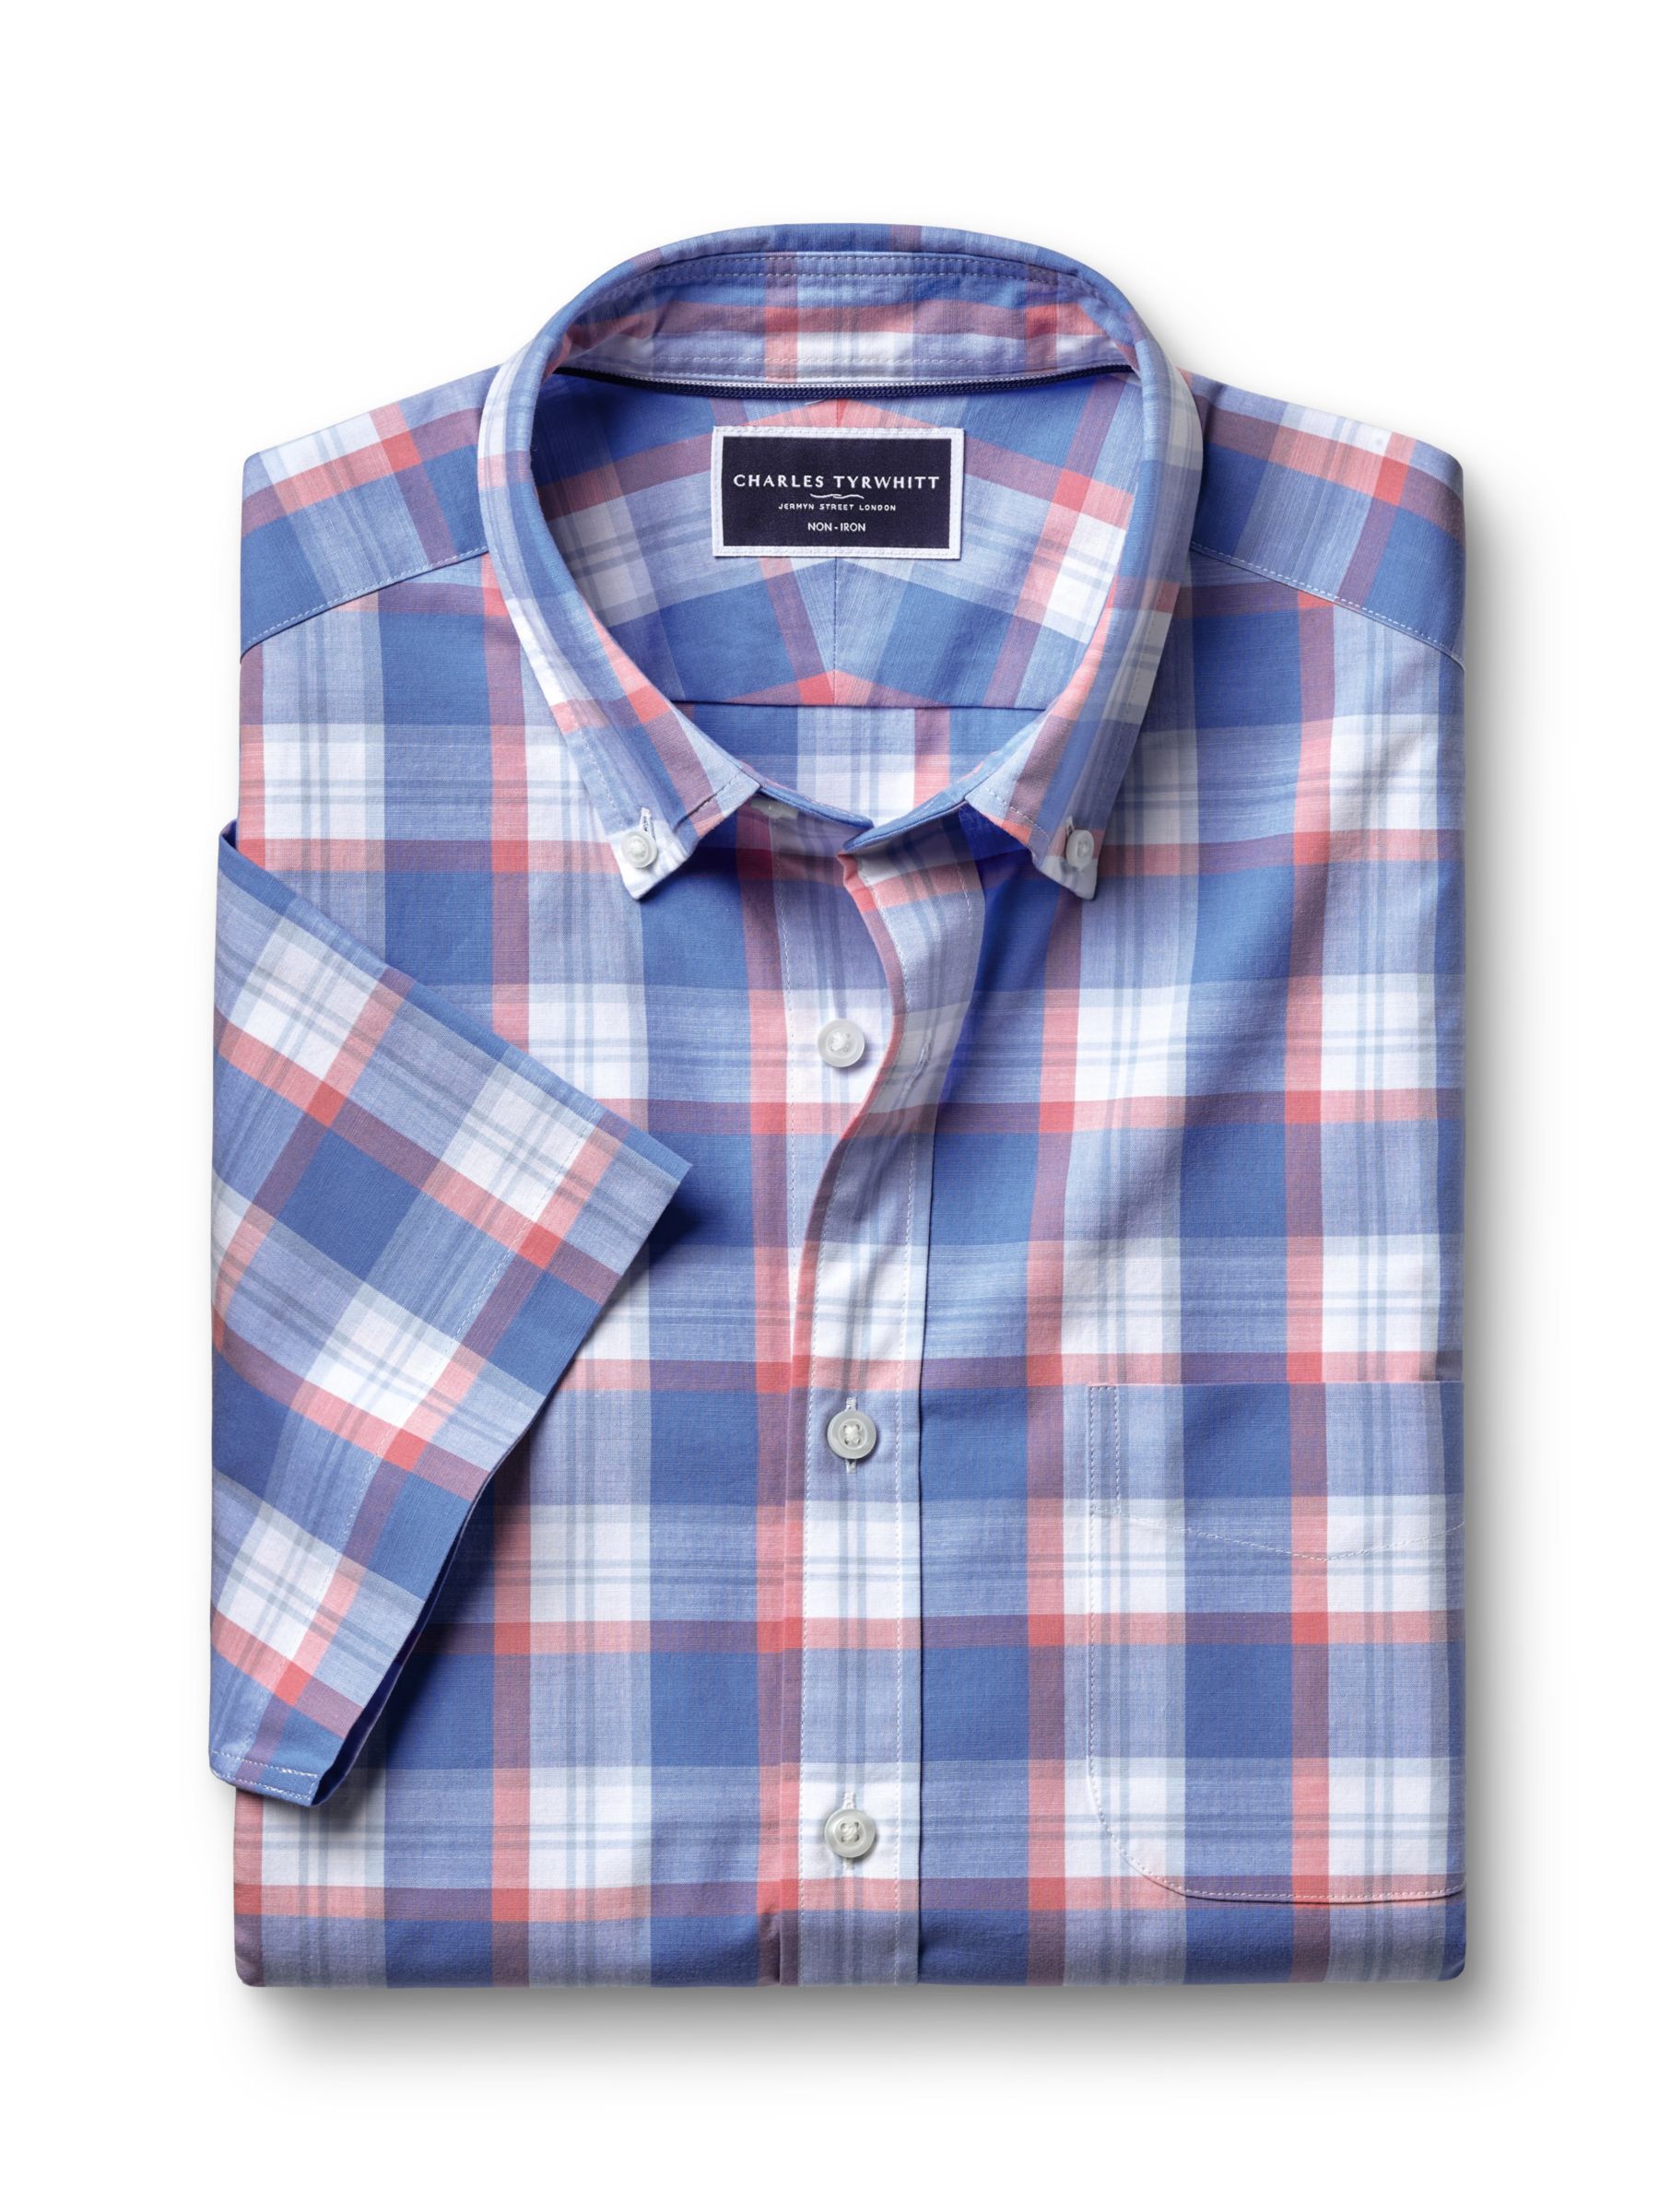 Charles Tyrwhitt Slim Fit Check Non-Iron Stretch Poplin Shirt, Pink/Multi, S